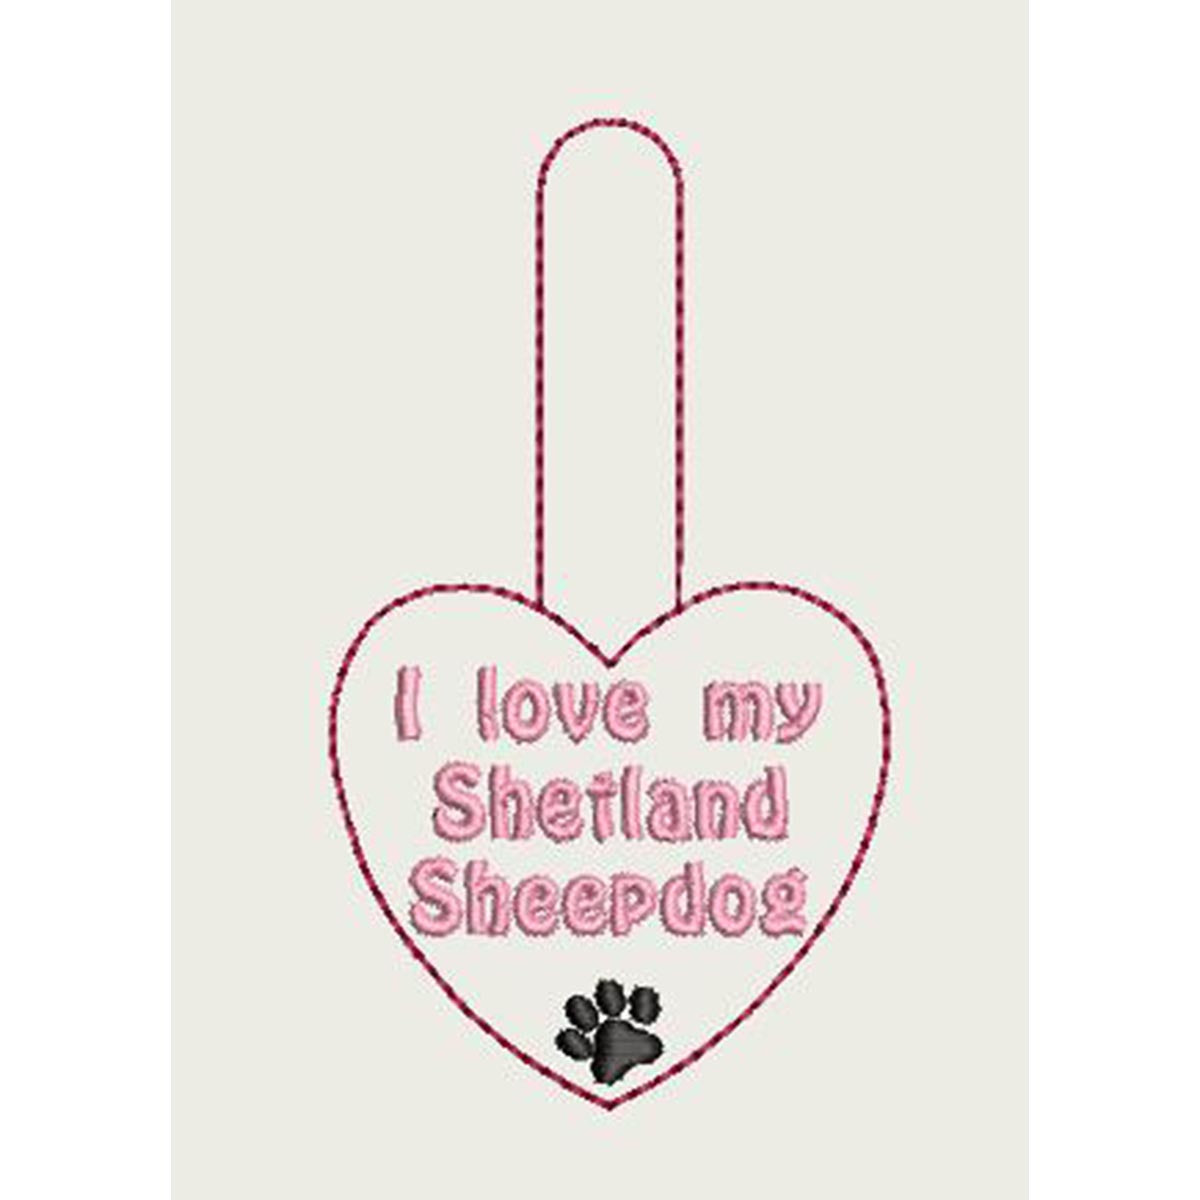 I Love My SHETLAND SHEEPDOG Key Fob 4x4